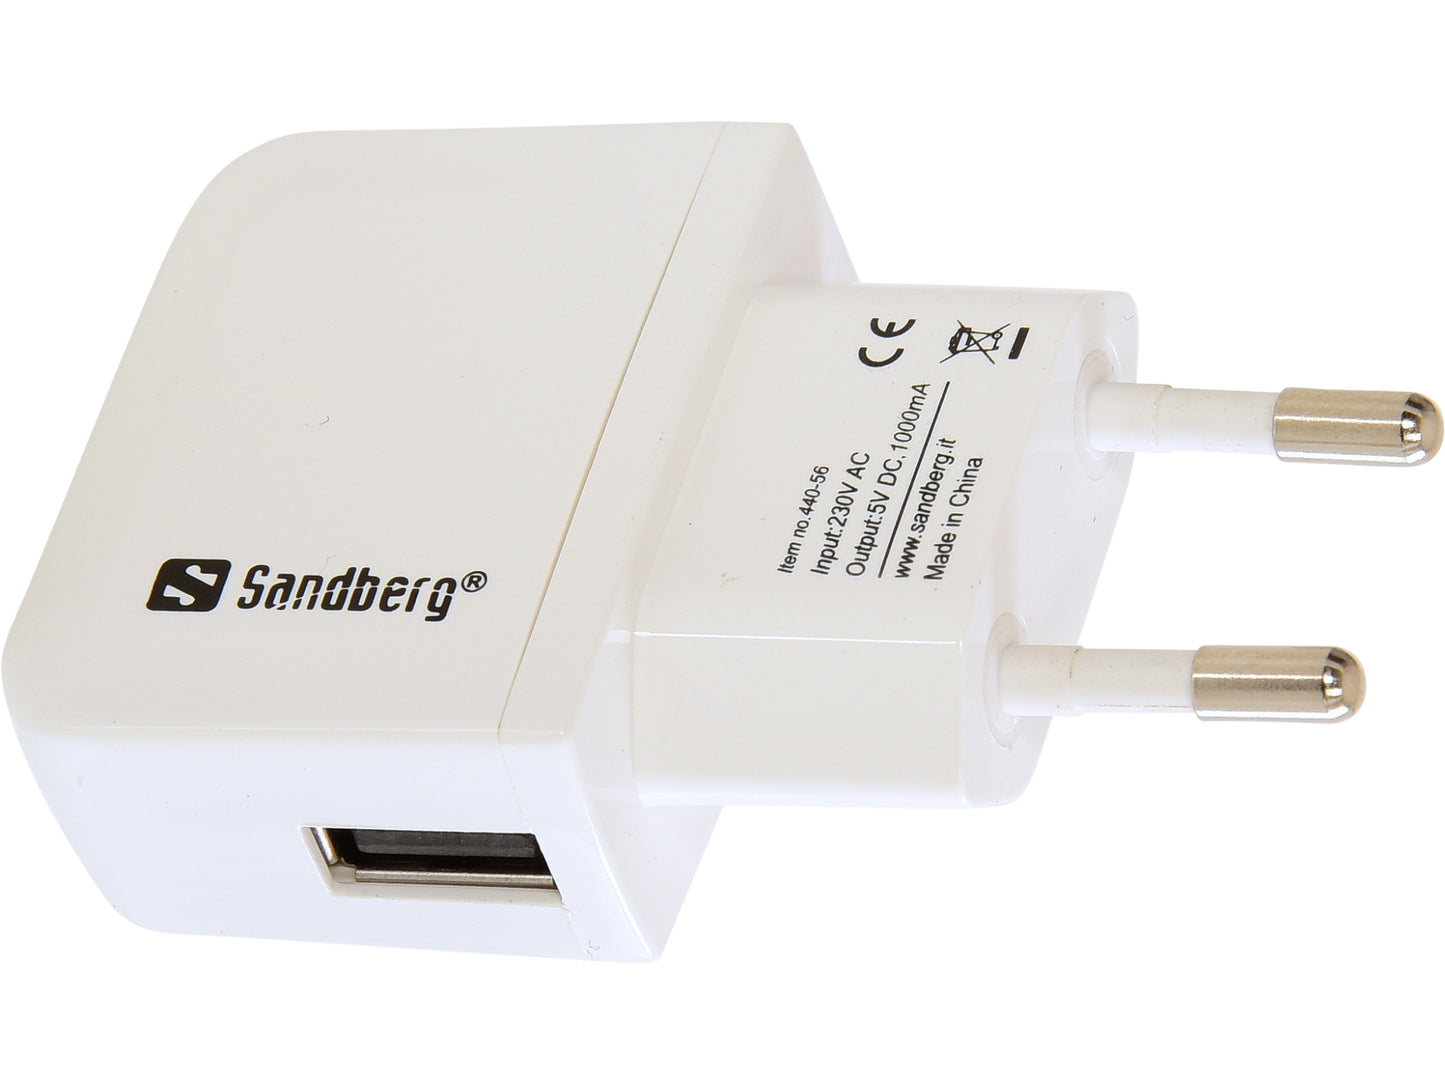 Sandberg Mini AC charger USB 1A EU 440-56